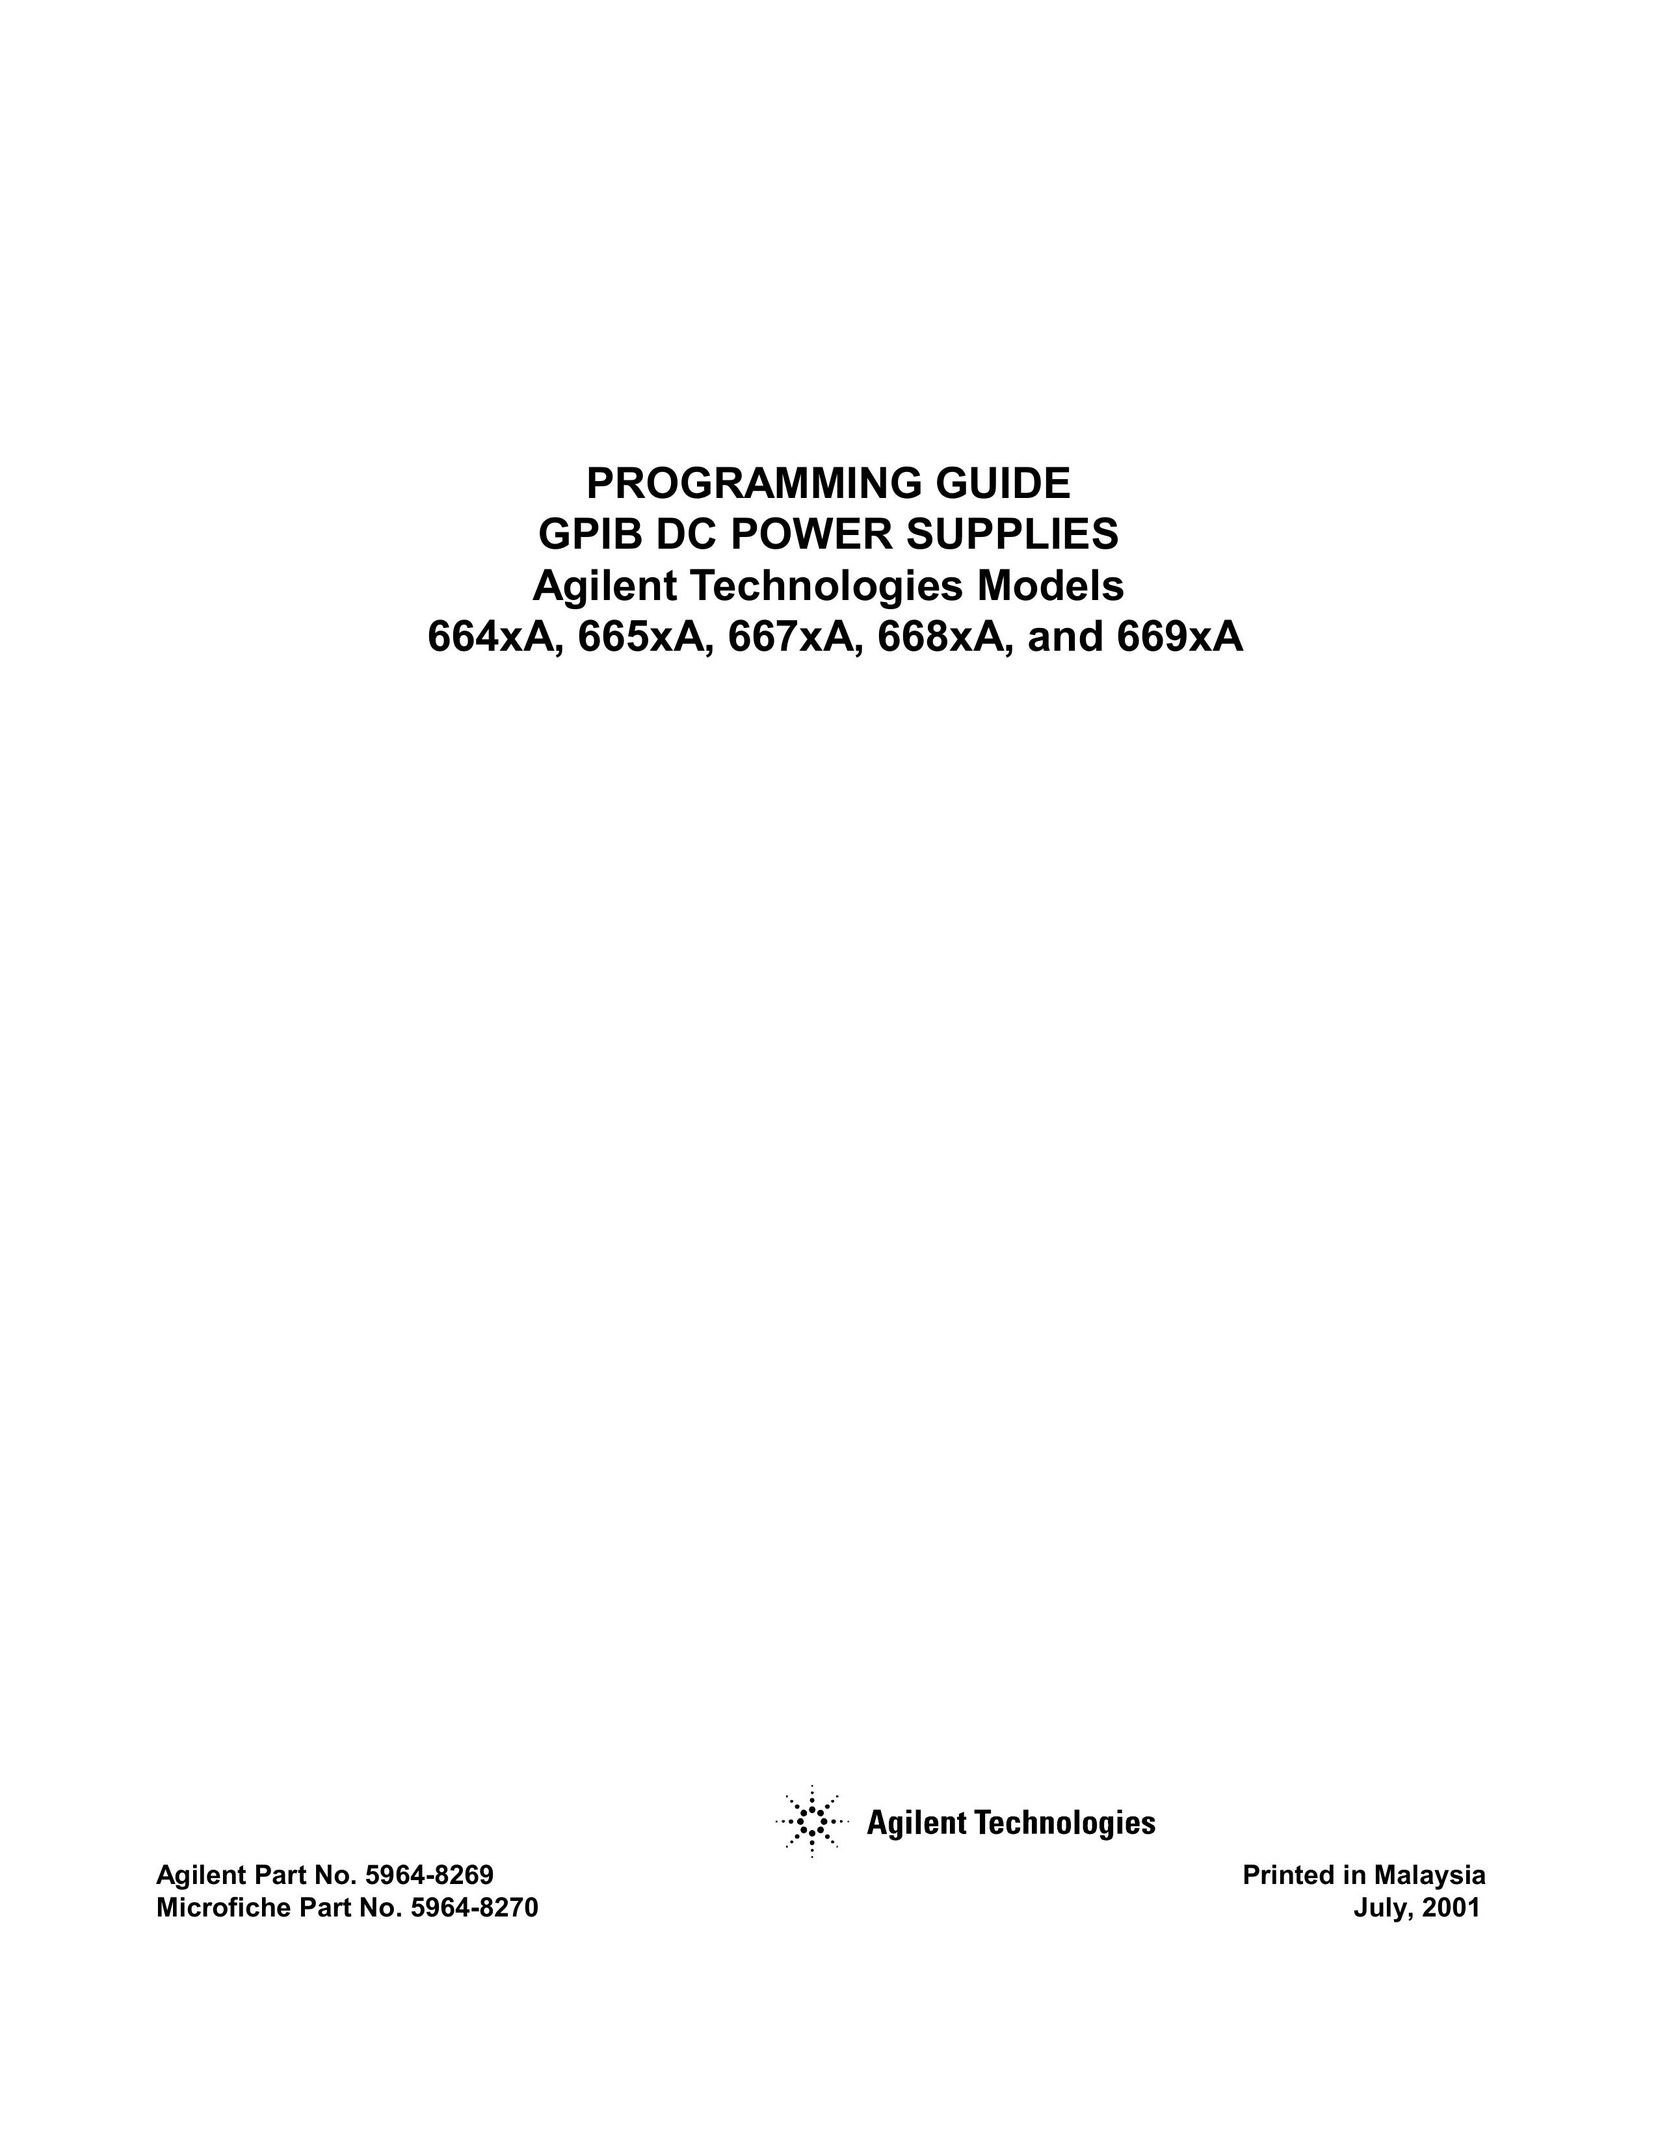 Agilent Technologies 664xA Power Supply User Manual